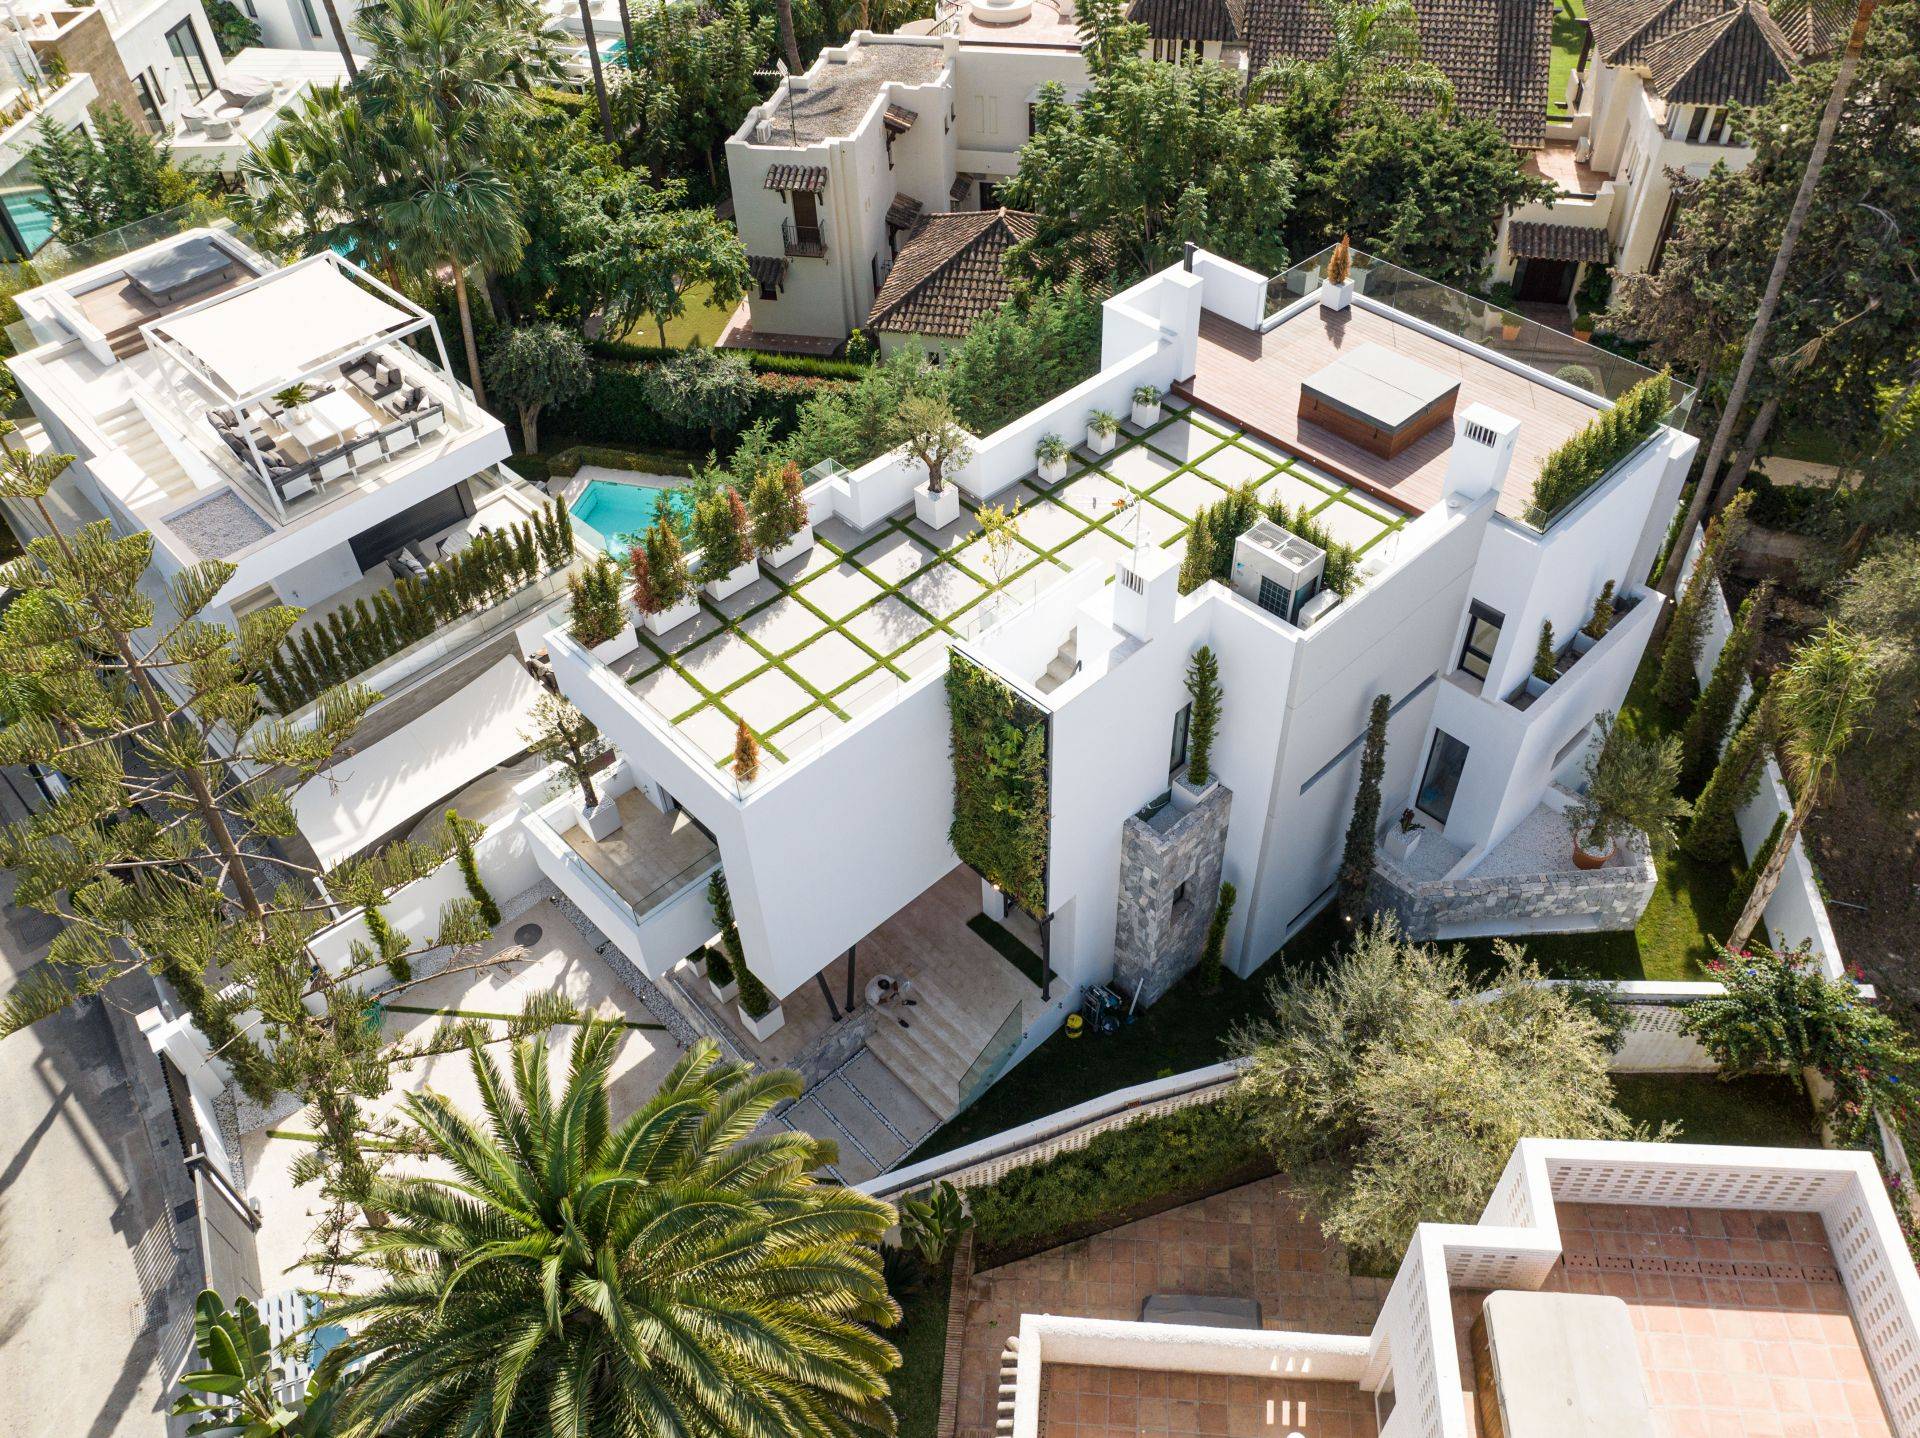 Villa Cypress is one of the Casablanca Beach Villas, located in a well established beachside urbanisation